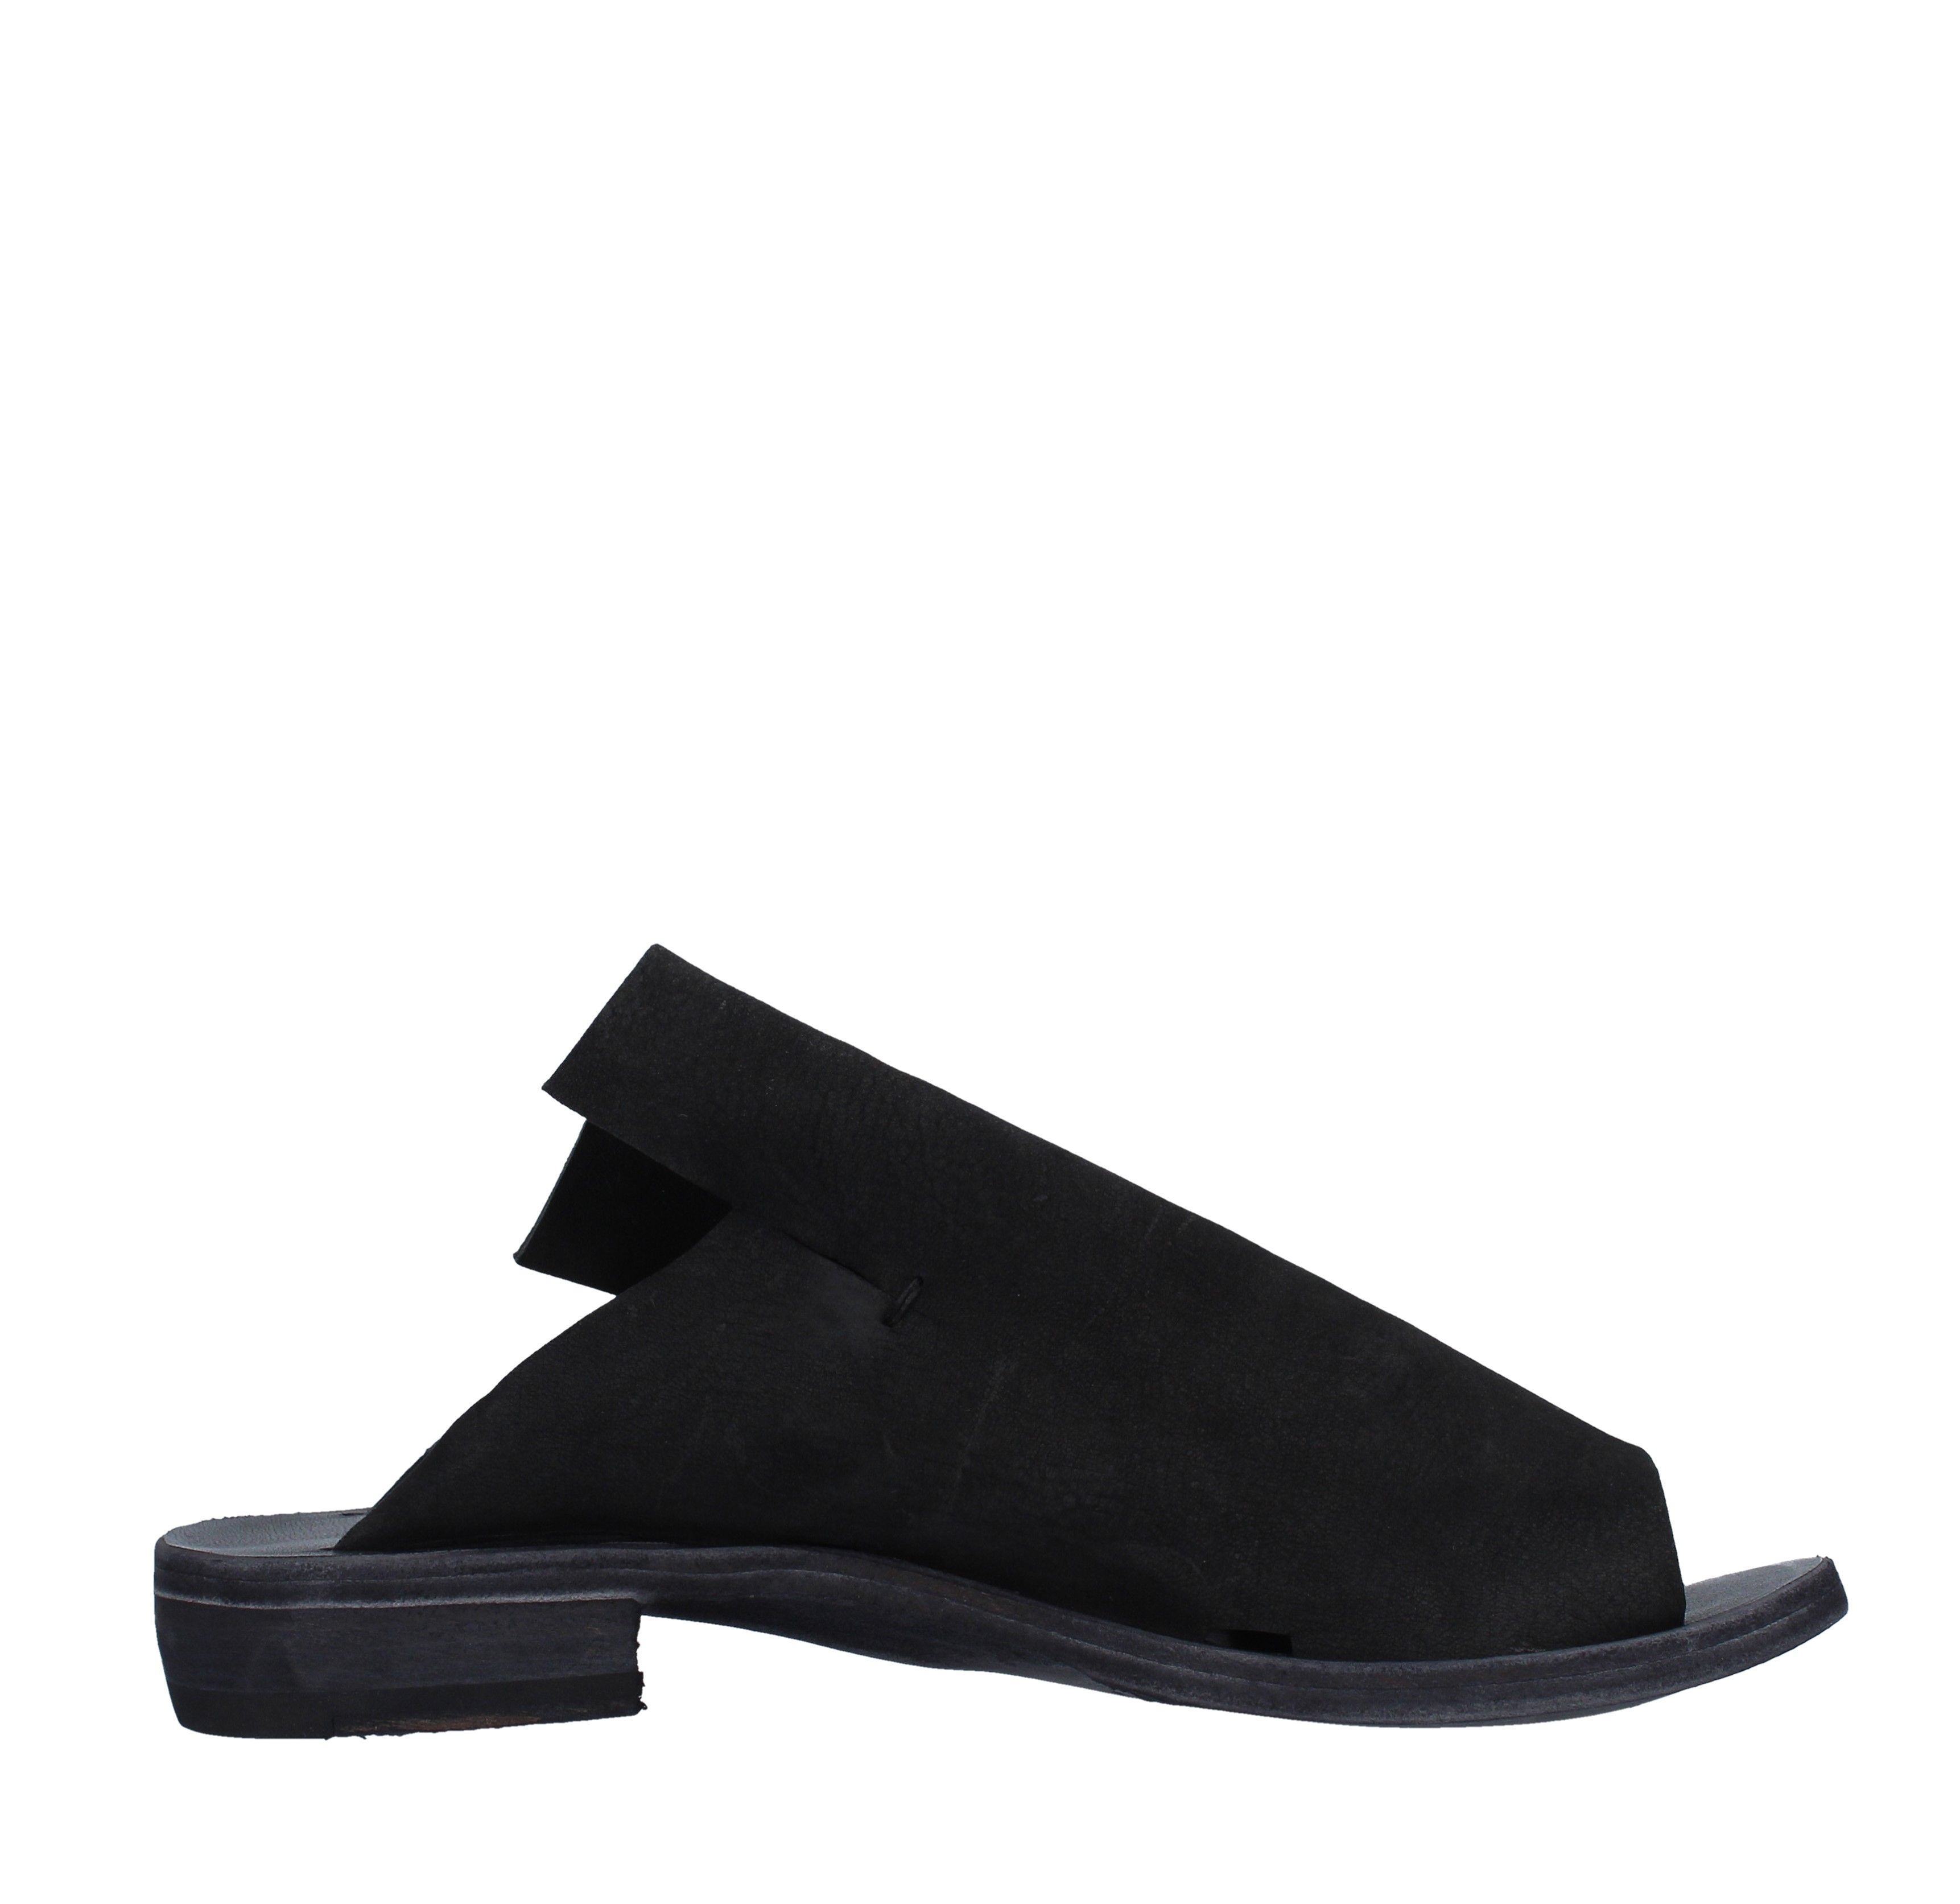 Sandals Black - OFFICINE CREATIVE - Ginevra calzature